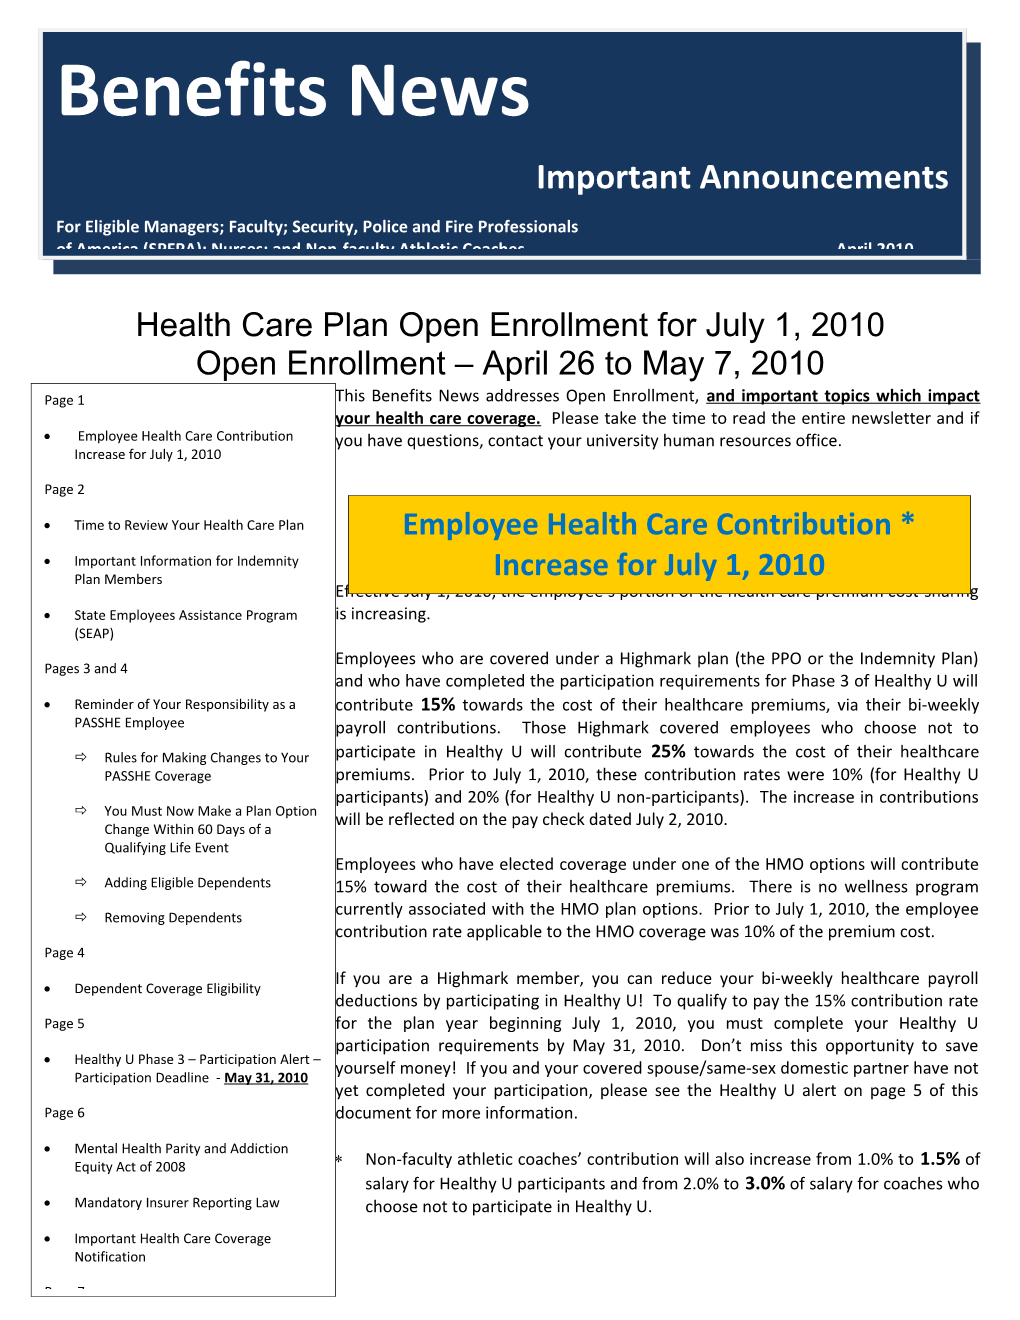 Health Care Plan Open Enrollment for July 1, 2010